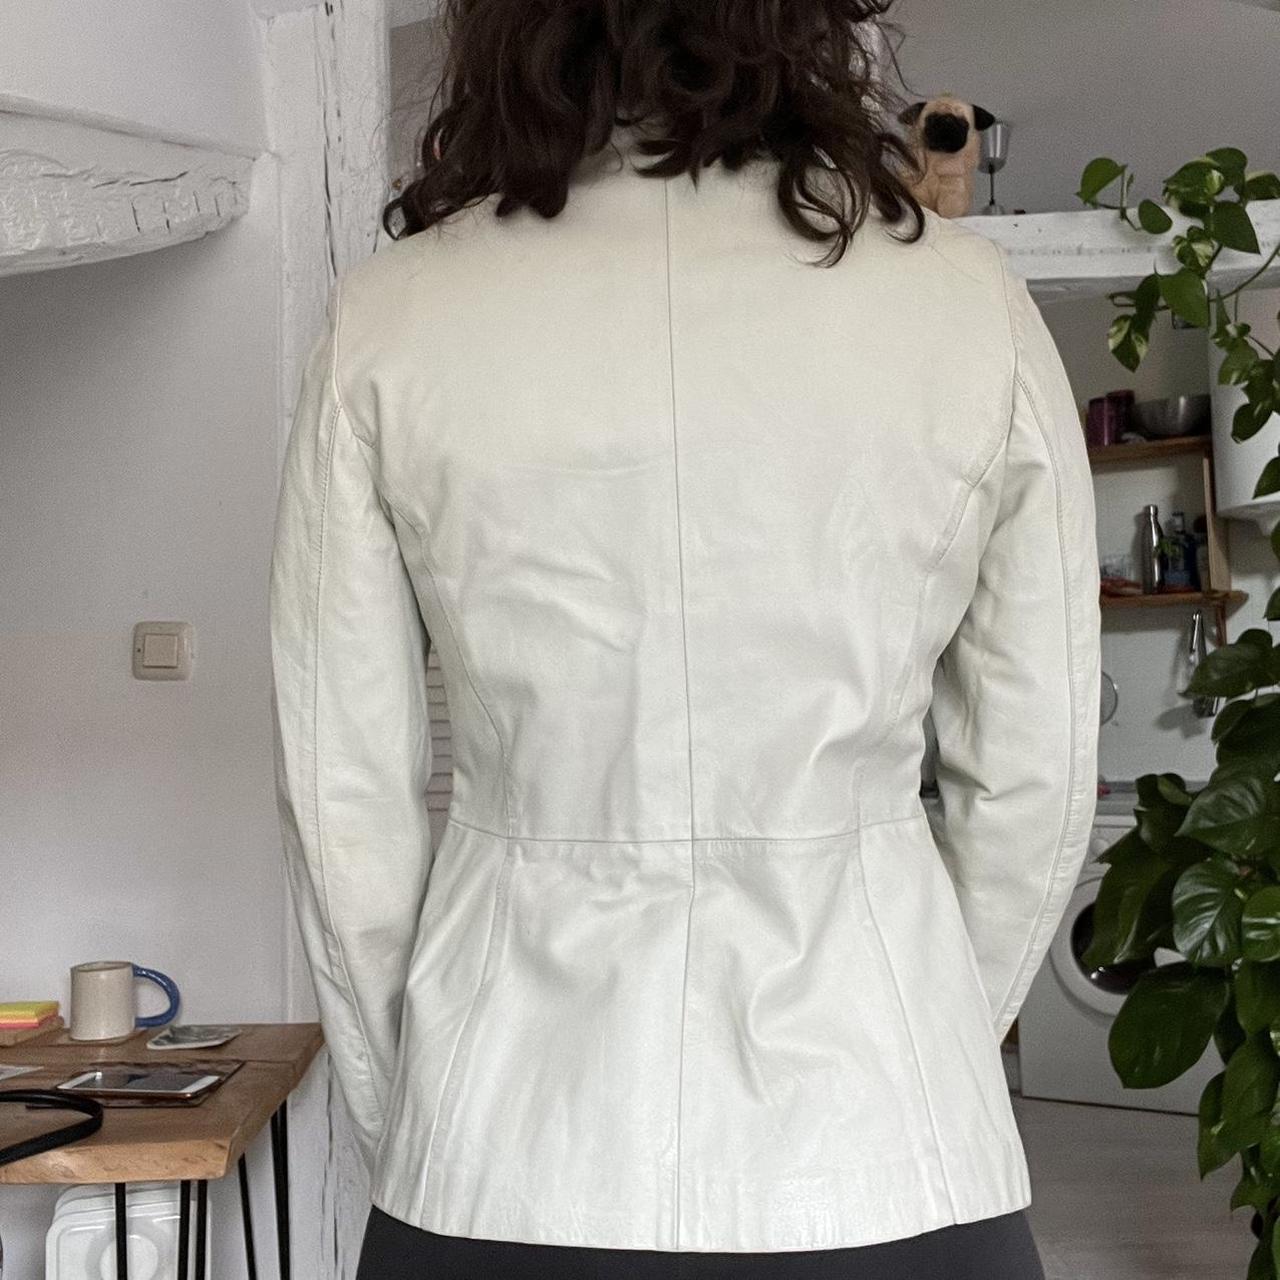 Women's White and Cream Jacket | Depop